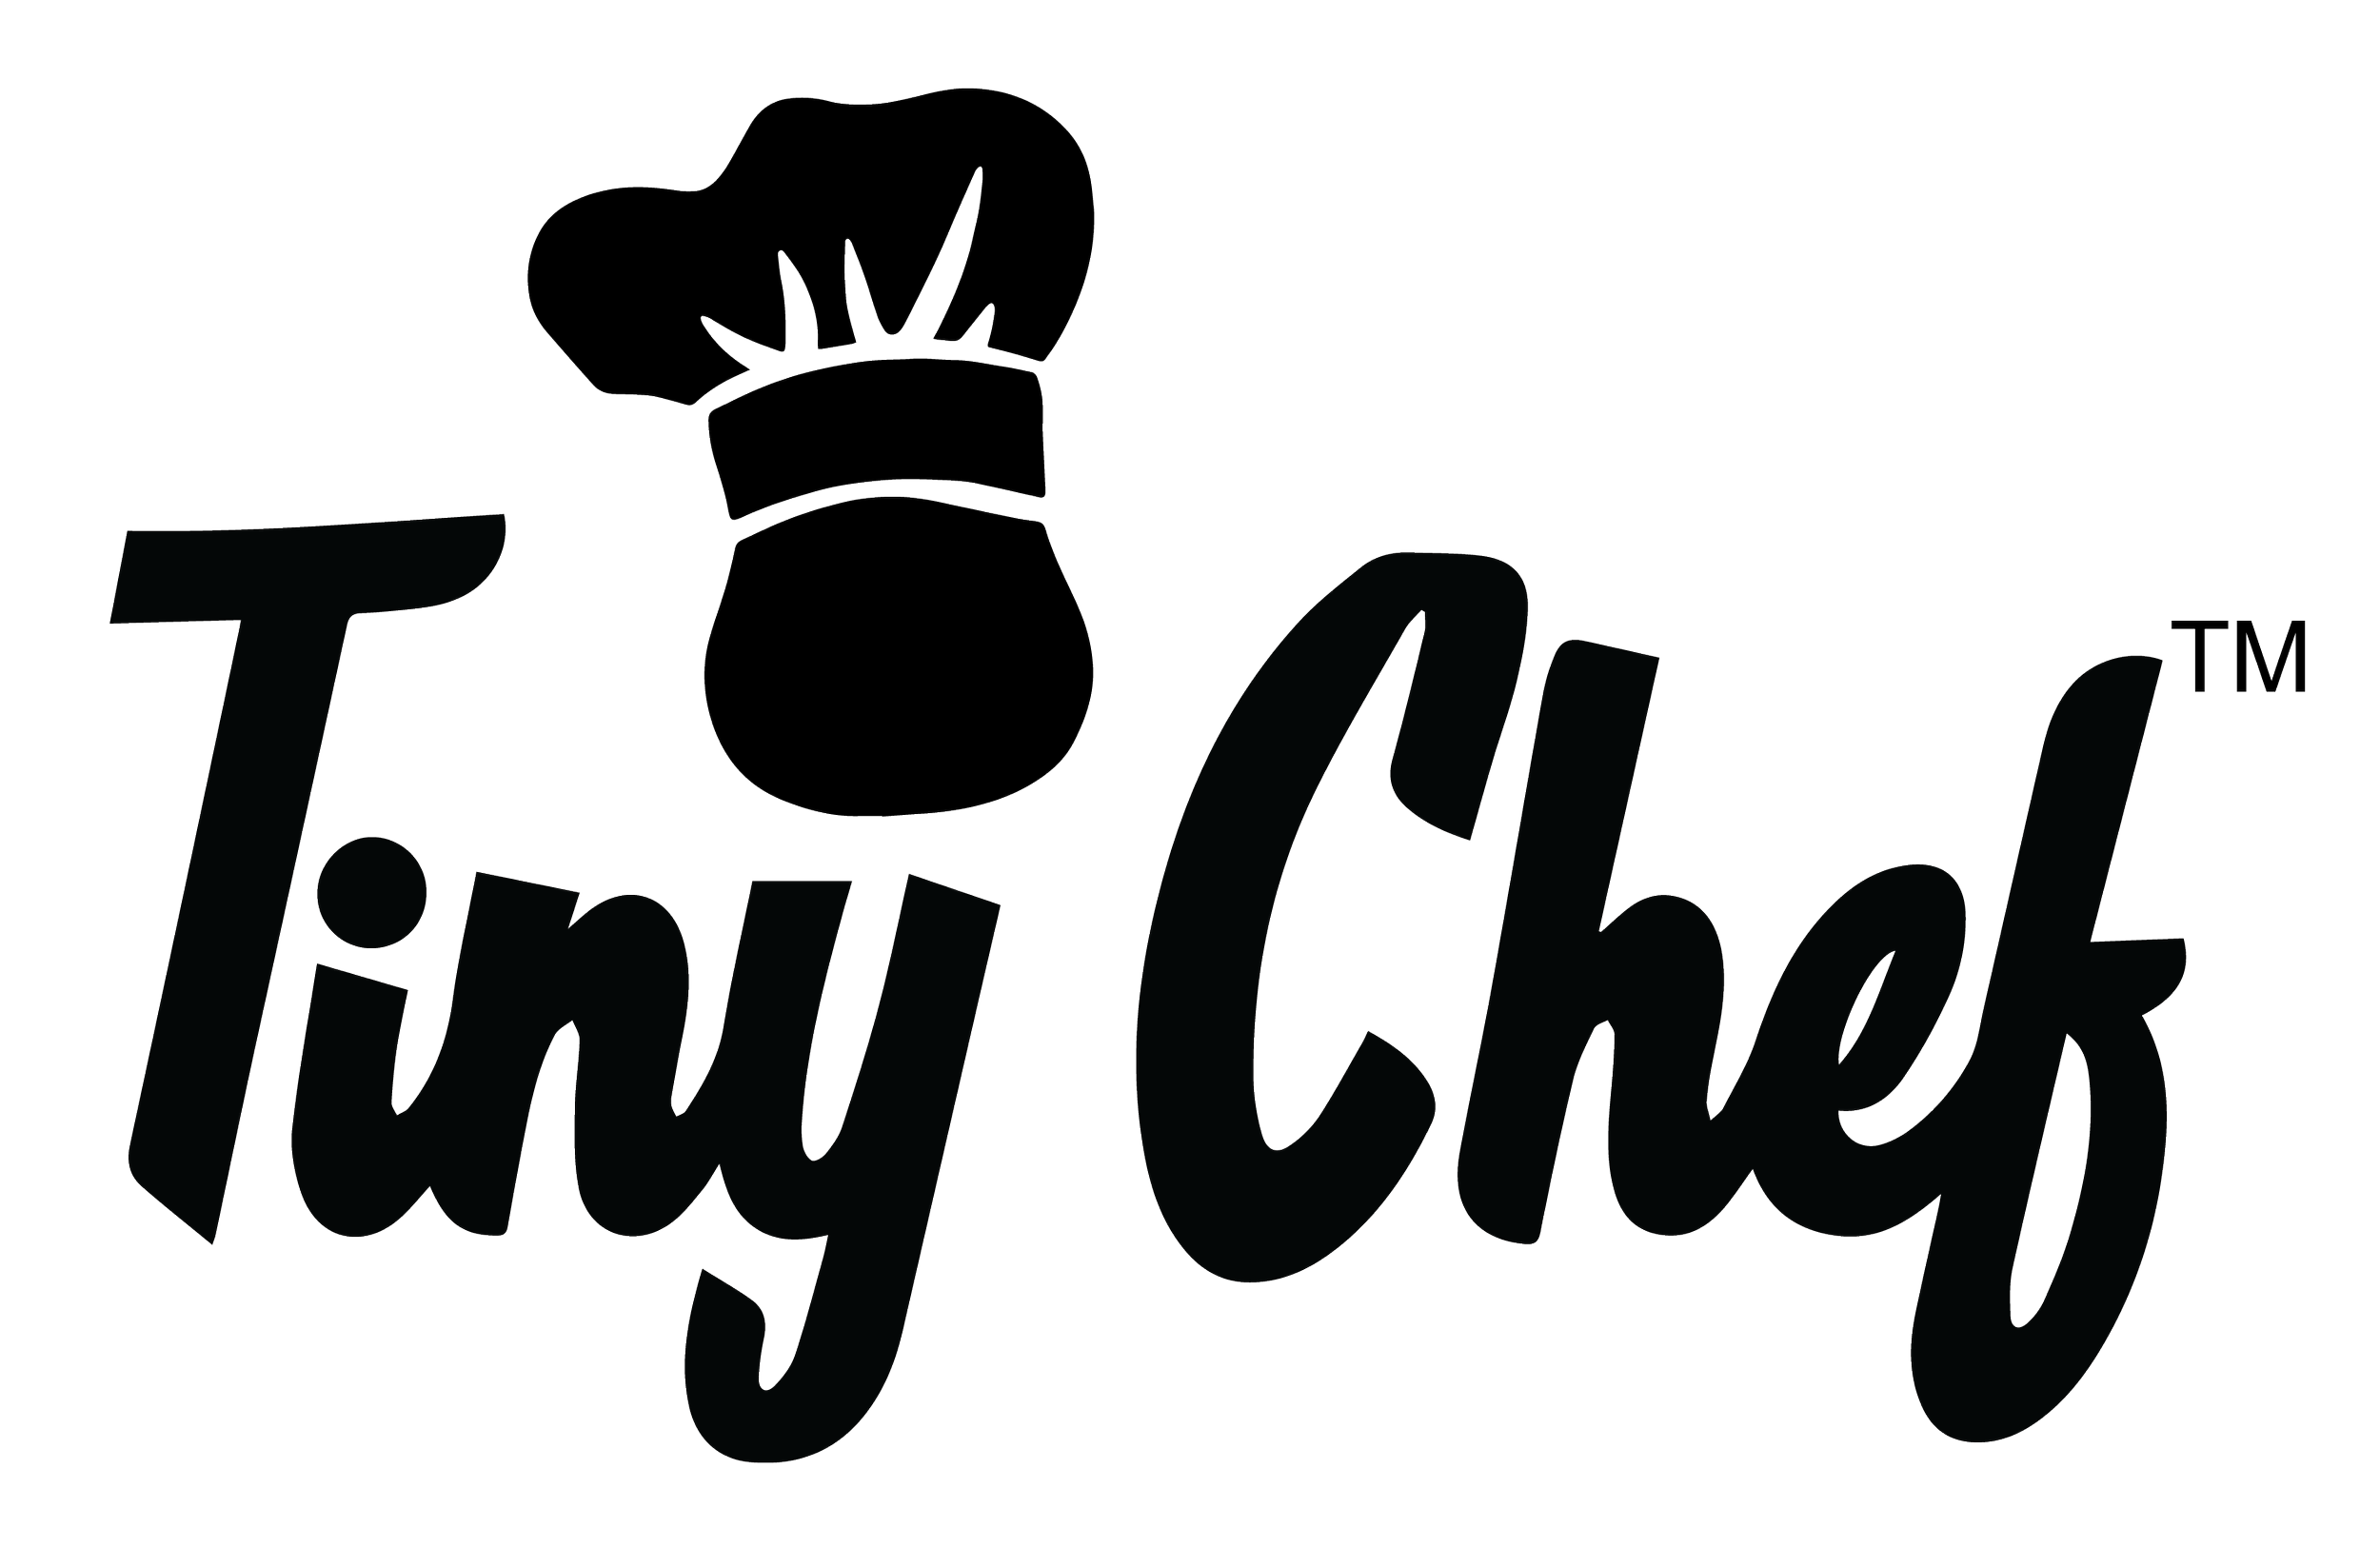 Little Chef logo and identity, by venturethree